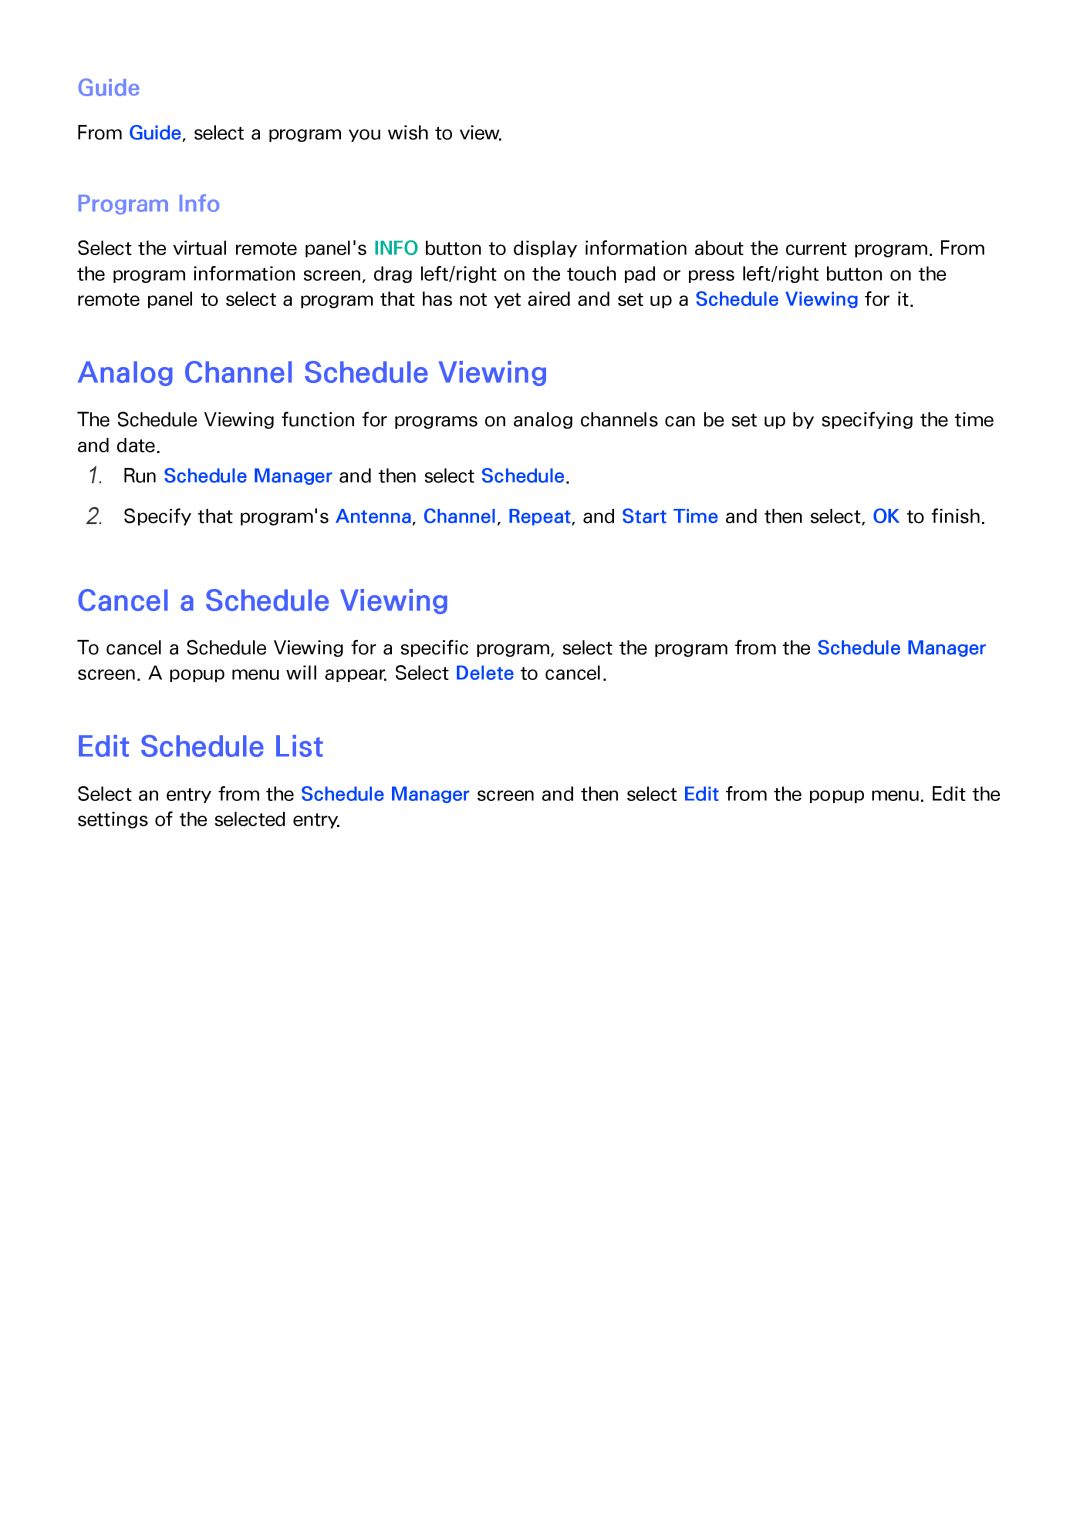 Samsung SEK-1000 manual Analog Channel Schedule Viewing, Cancel a Schedule Viewing, Edit Schedule List, Guide, Program Info 